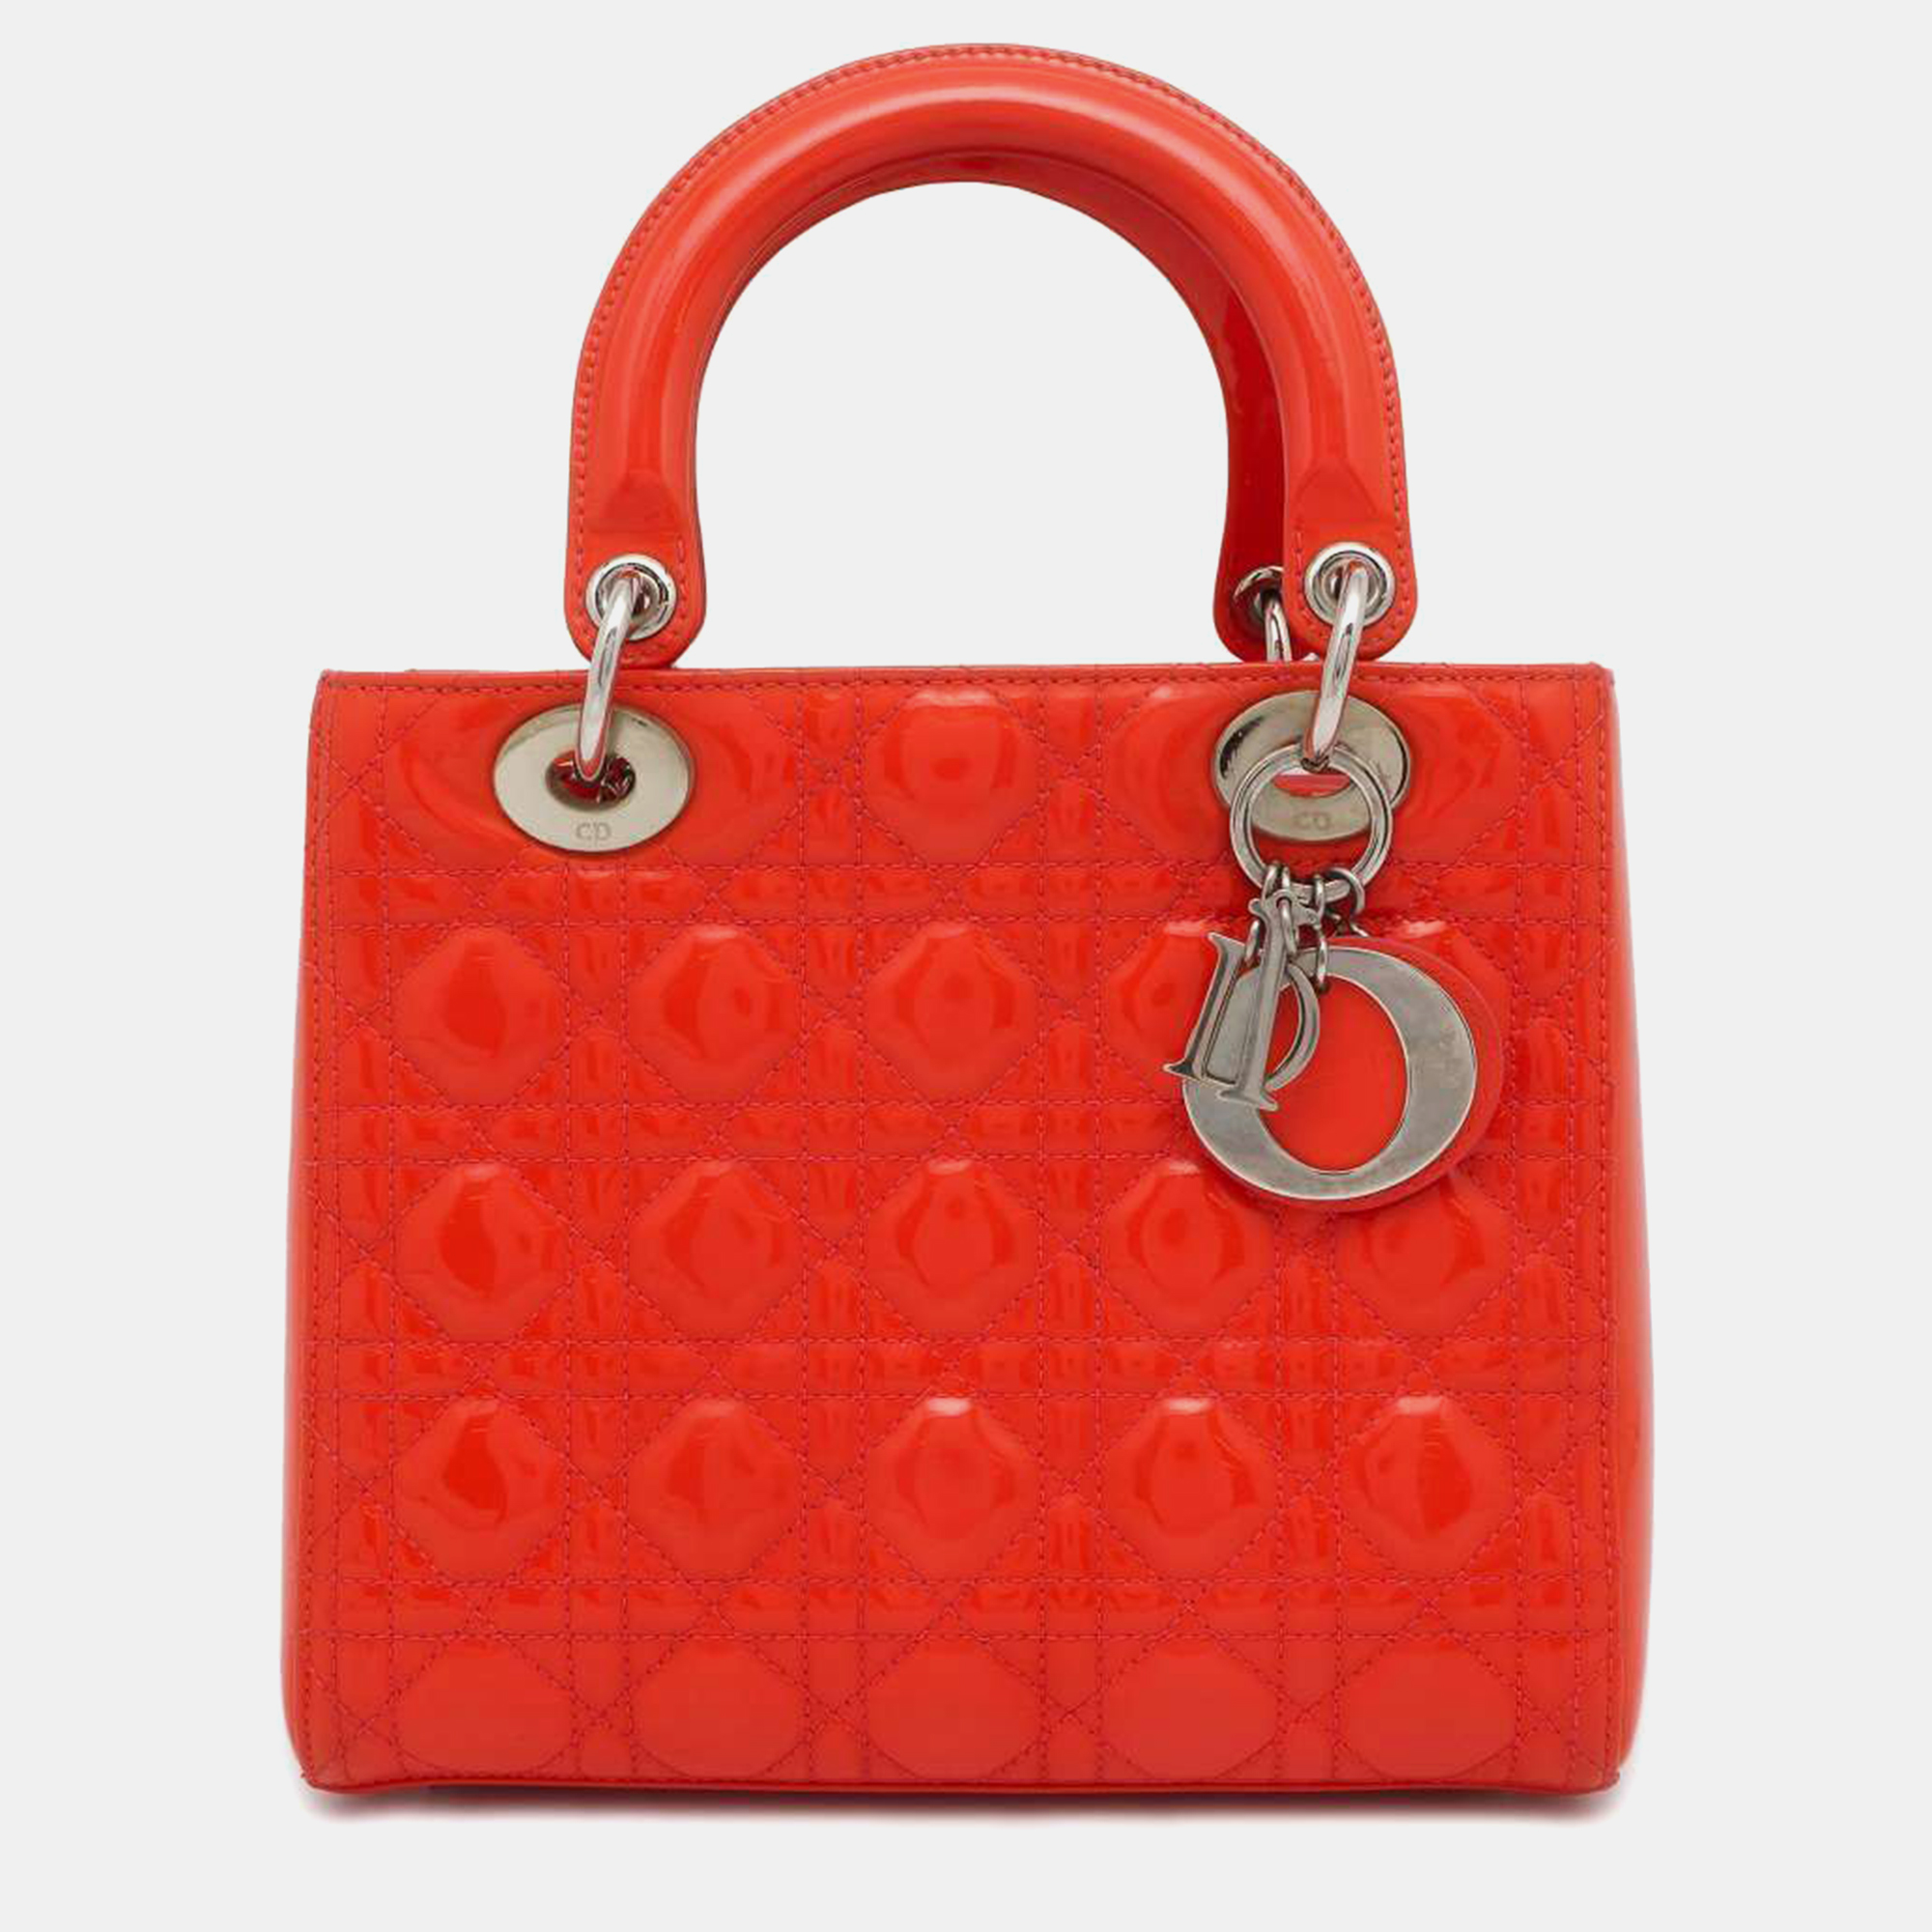 Dior orange patent leather medium lady dior handbag